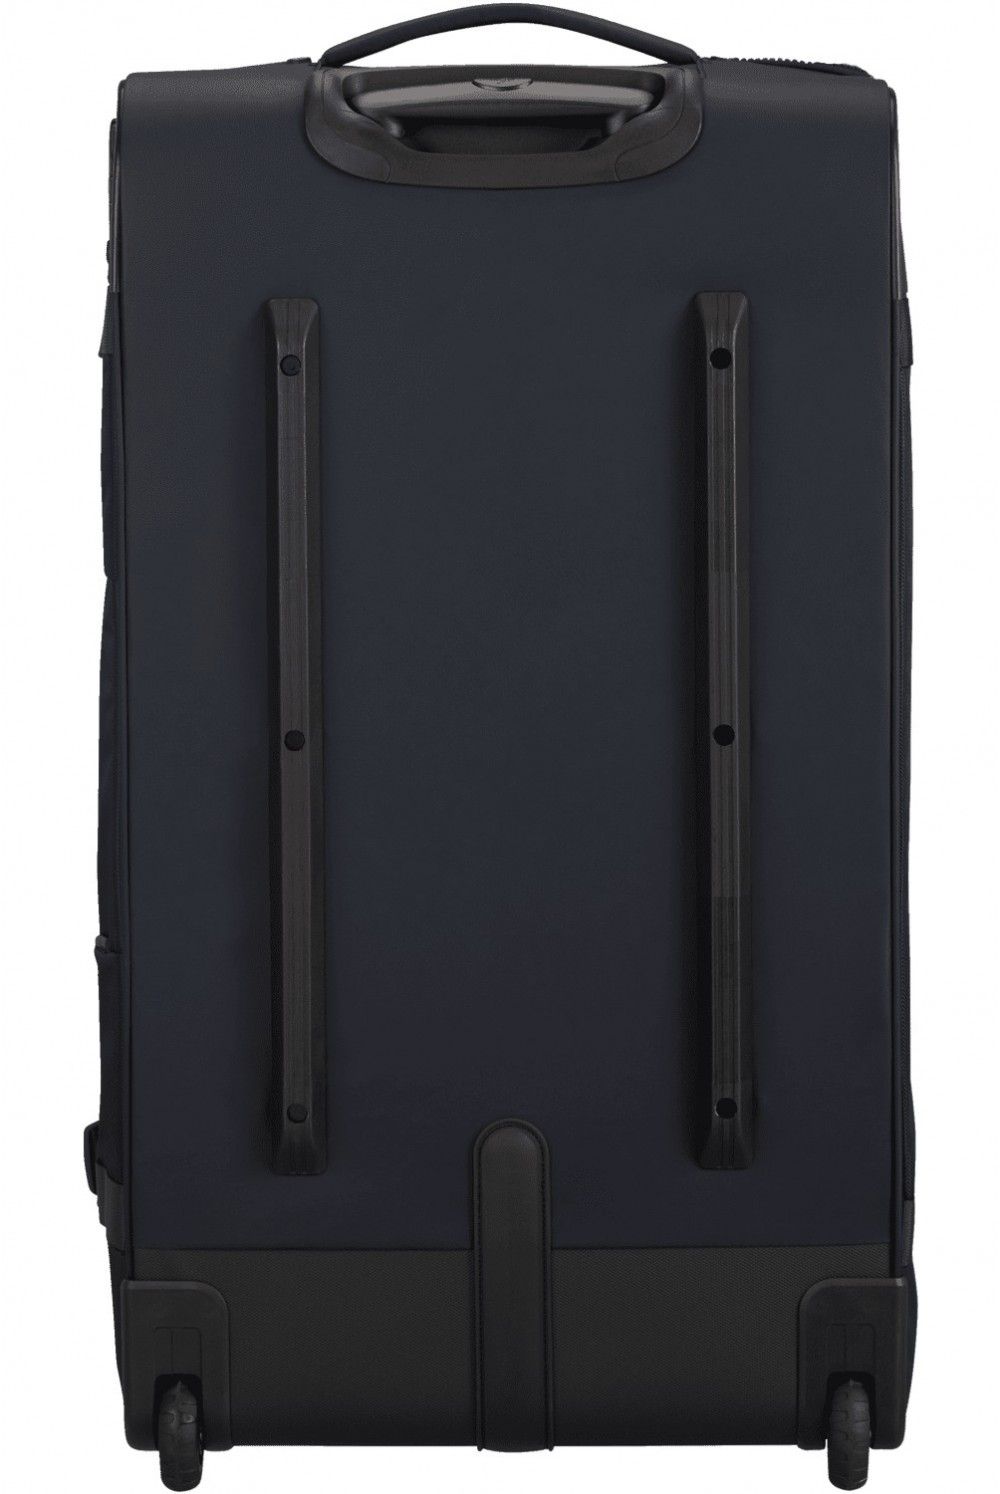 Samsonite Midtown 79cm travel bag with wheels